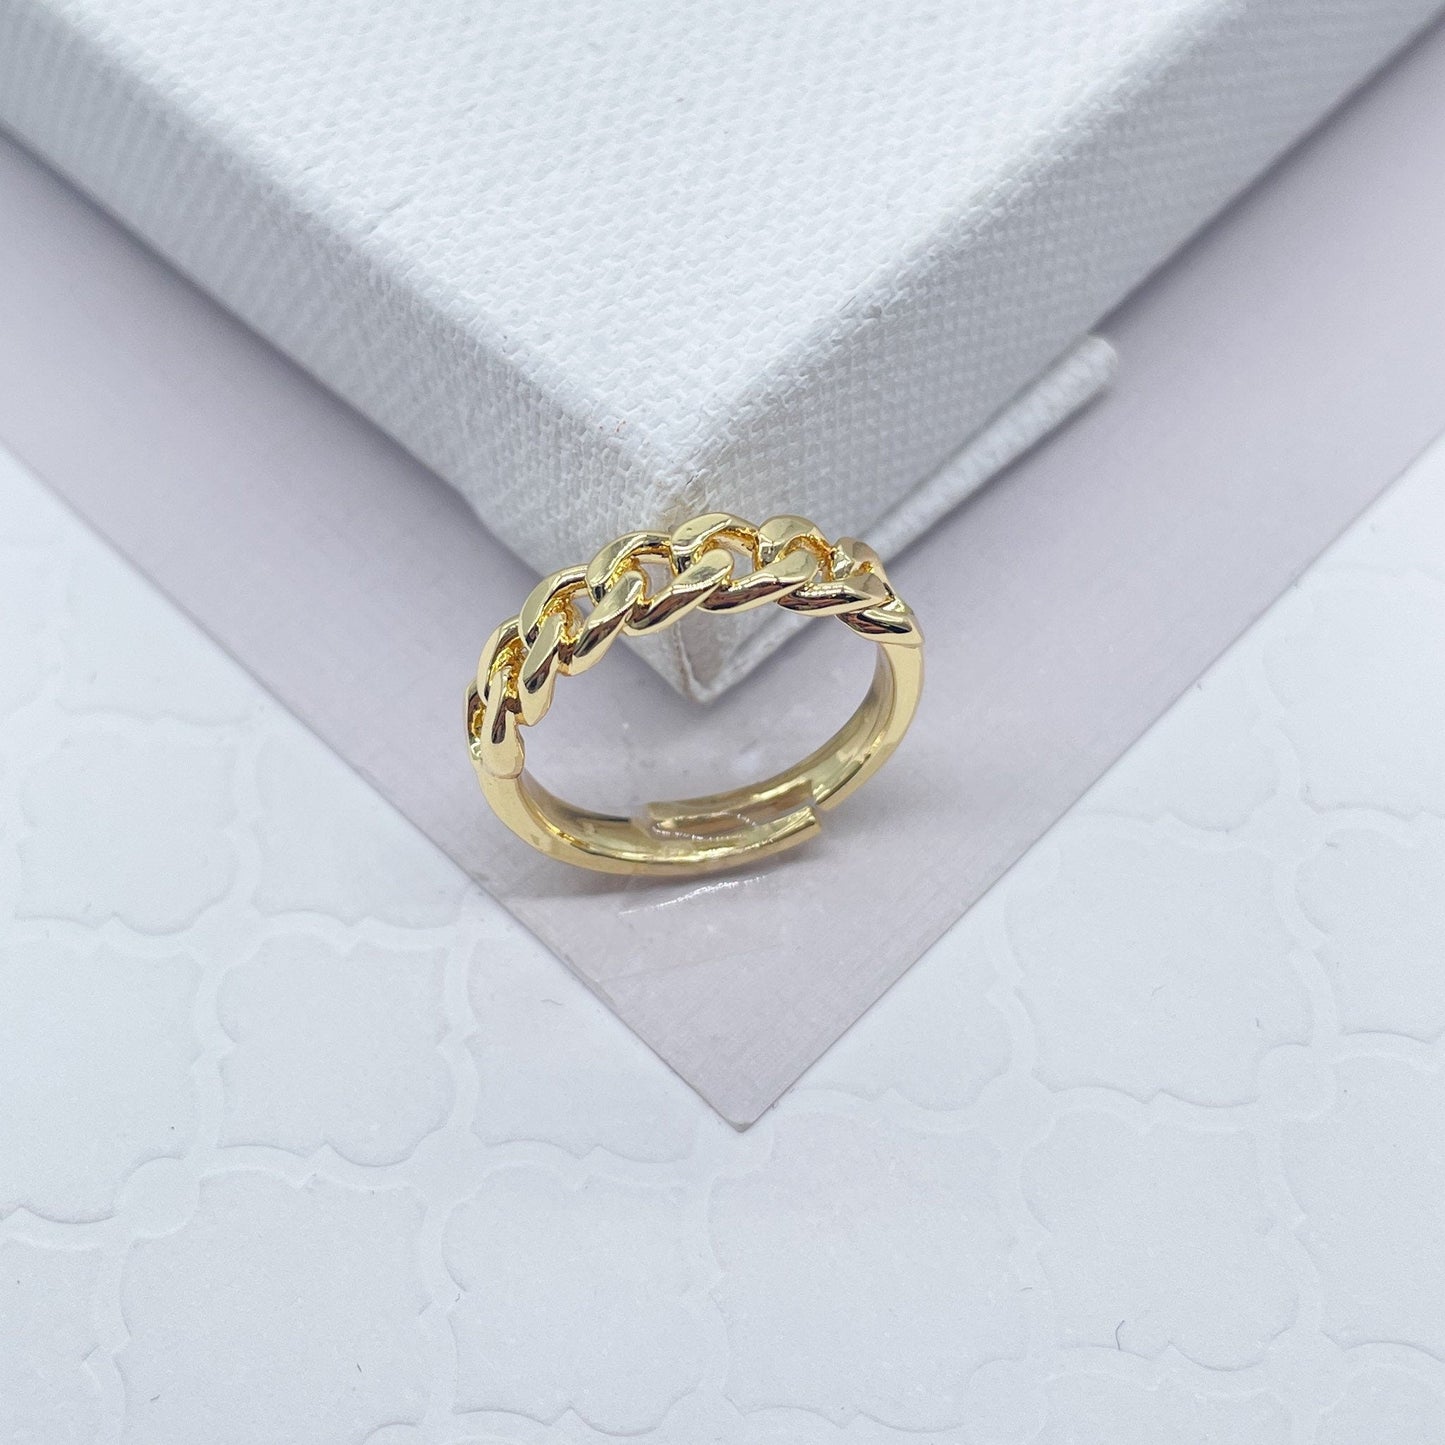 18k Gold Layered Thin Link Adjustable Ring, Cuban Link Adjustable Ring, Curb Link